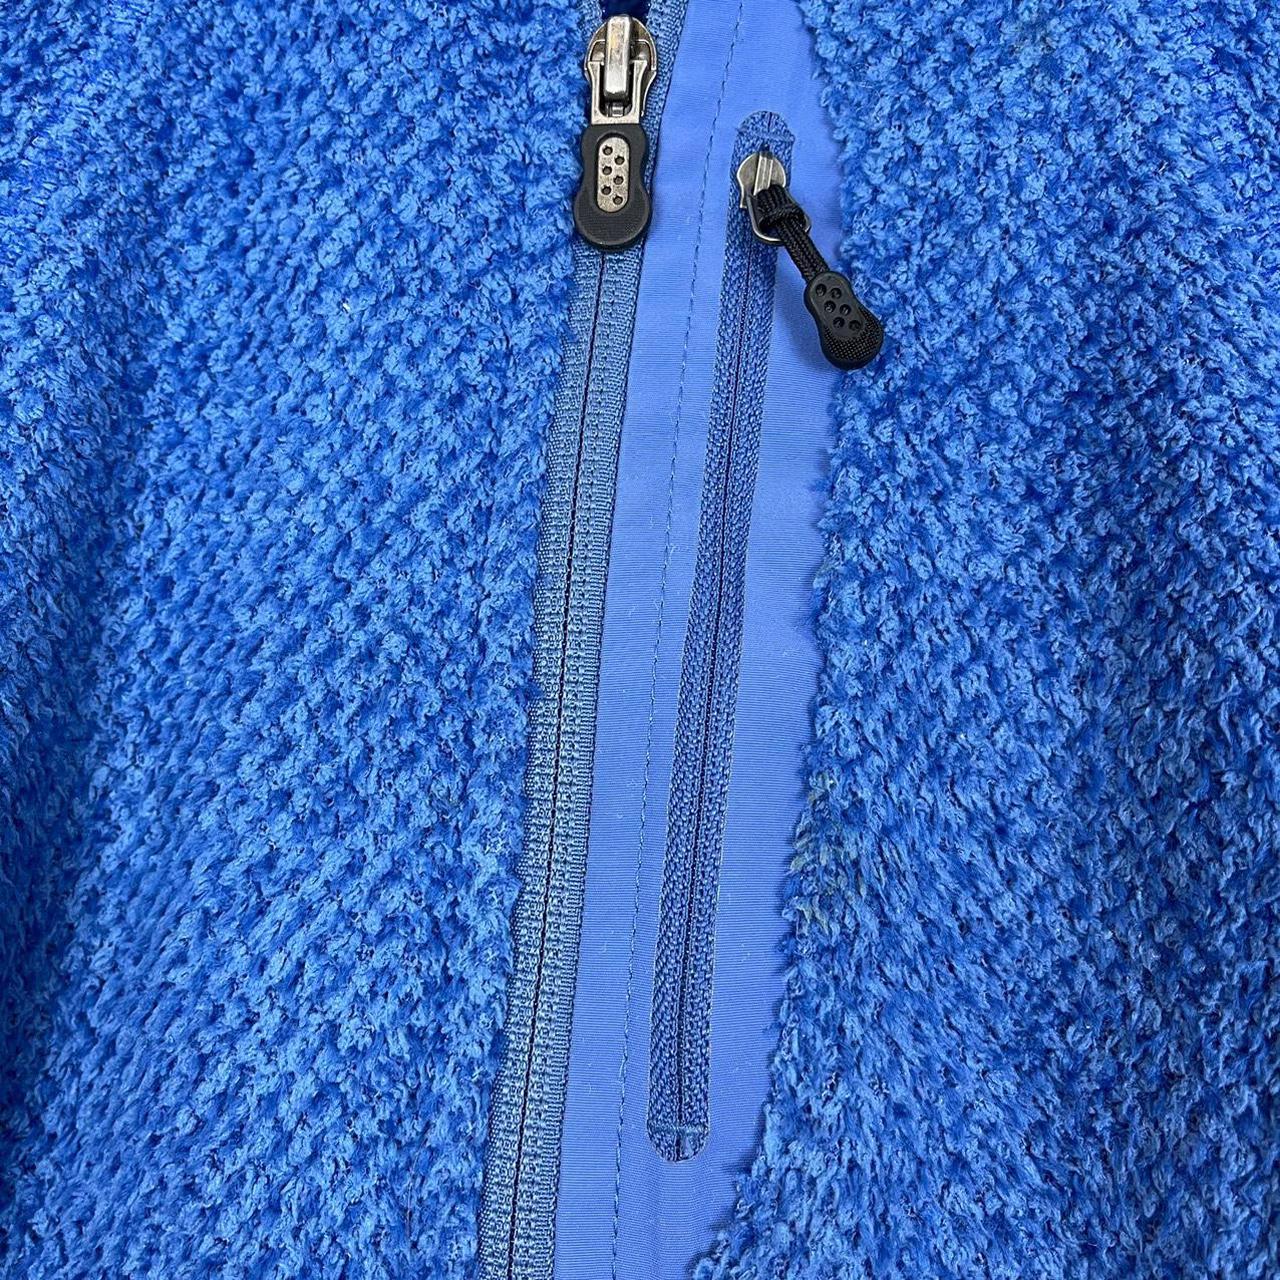 Product Image 4 - Patagonia Blue Fleece Jacket

🌊Free shipping